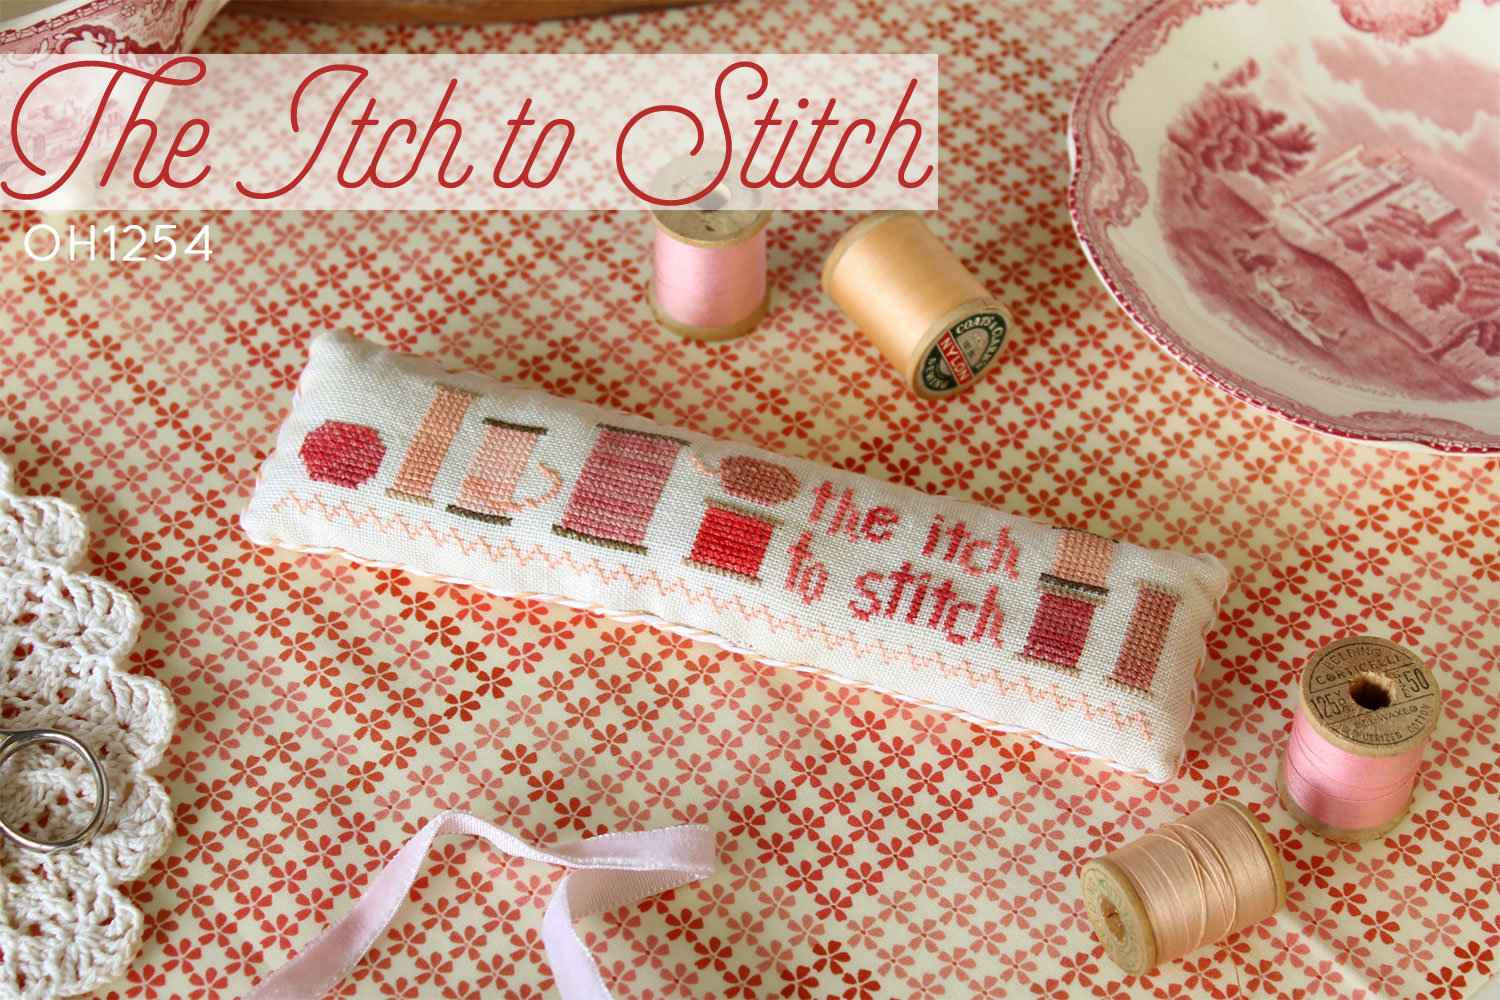 The Itch to Stitch